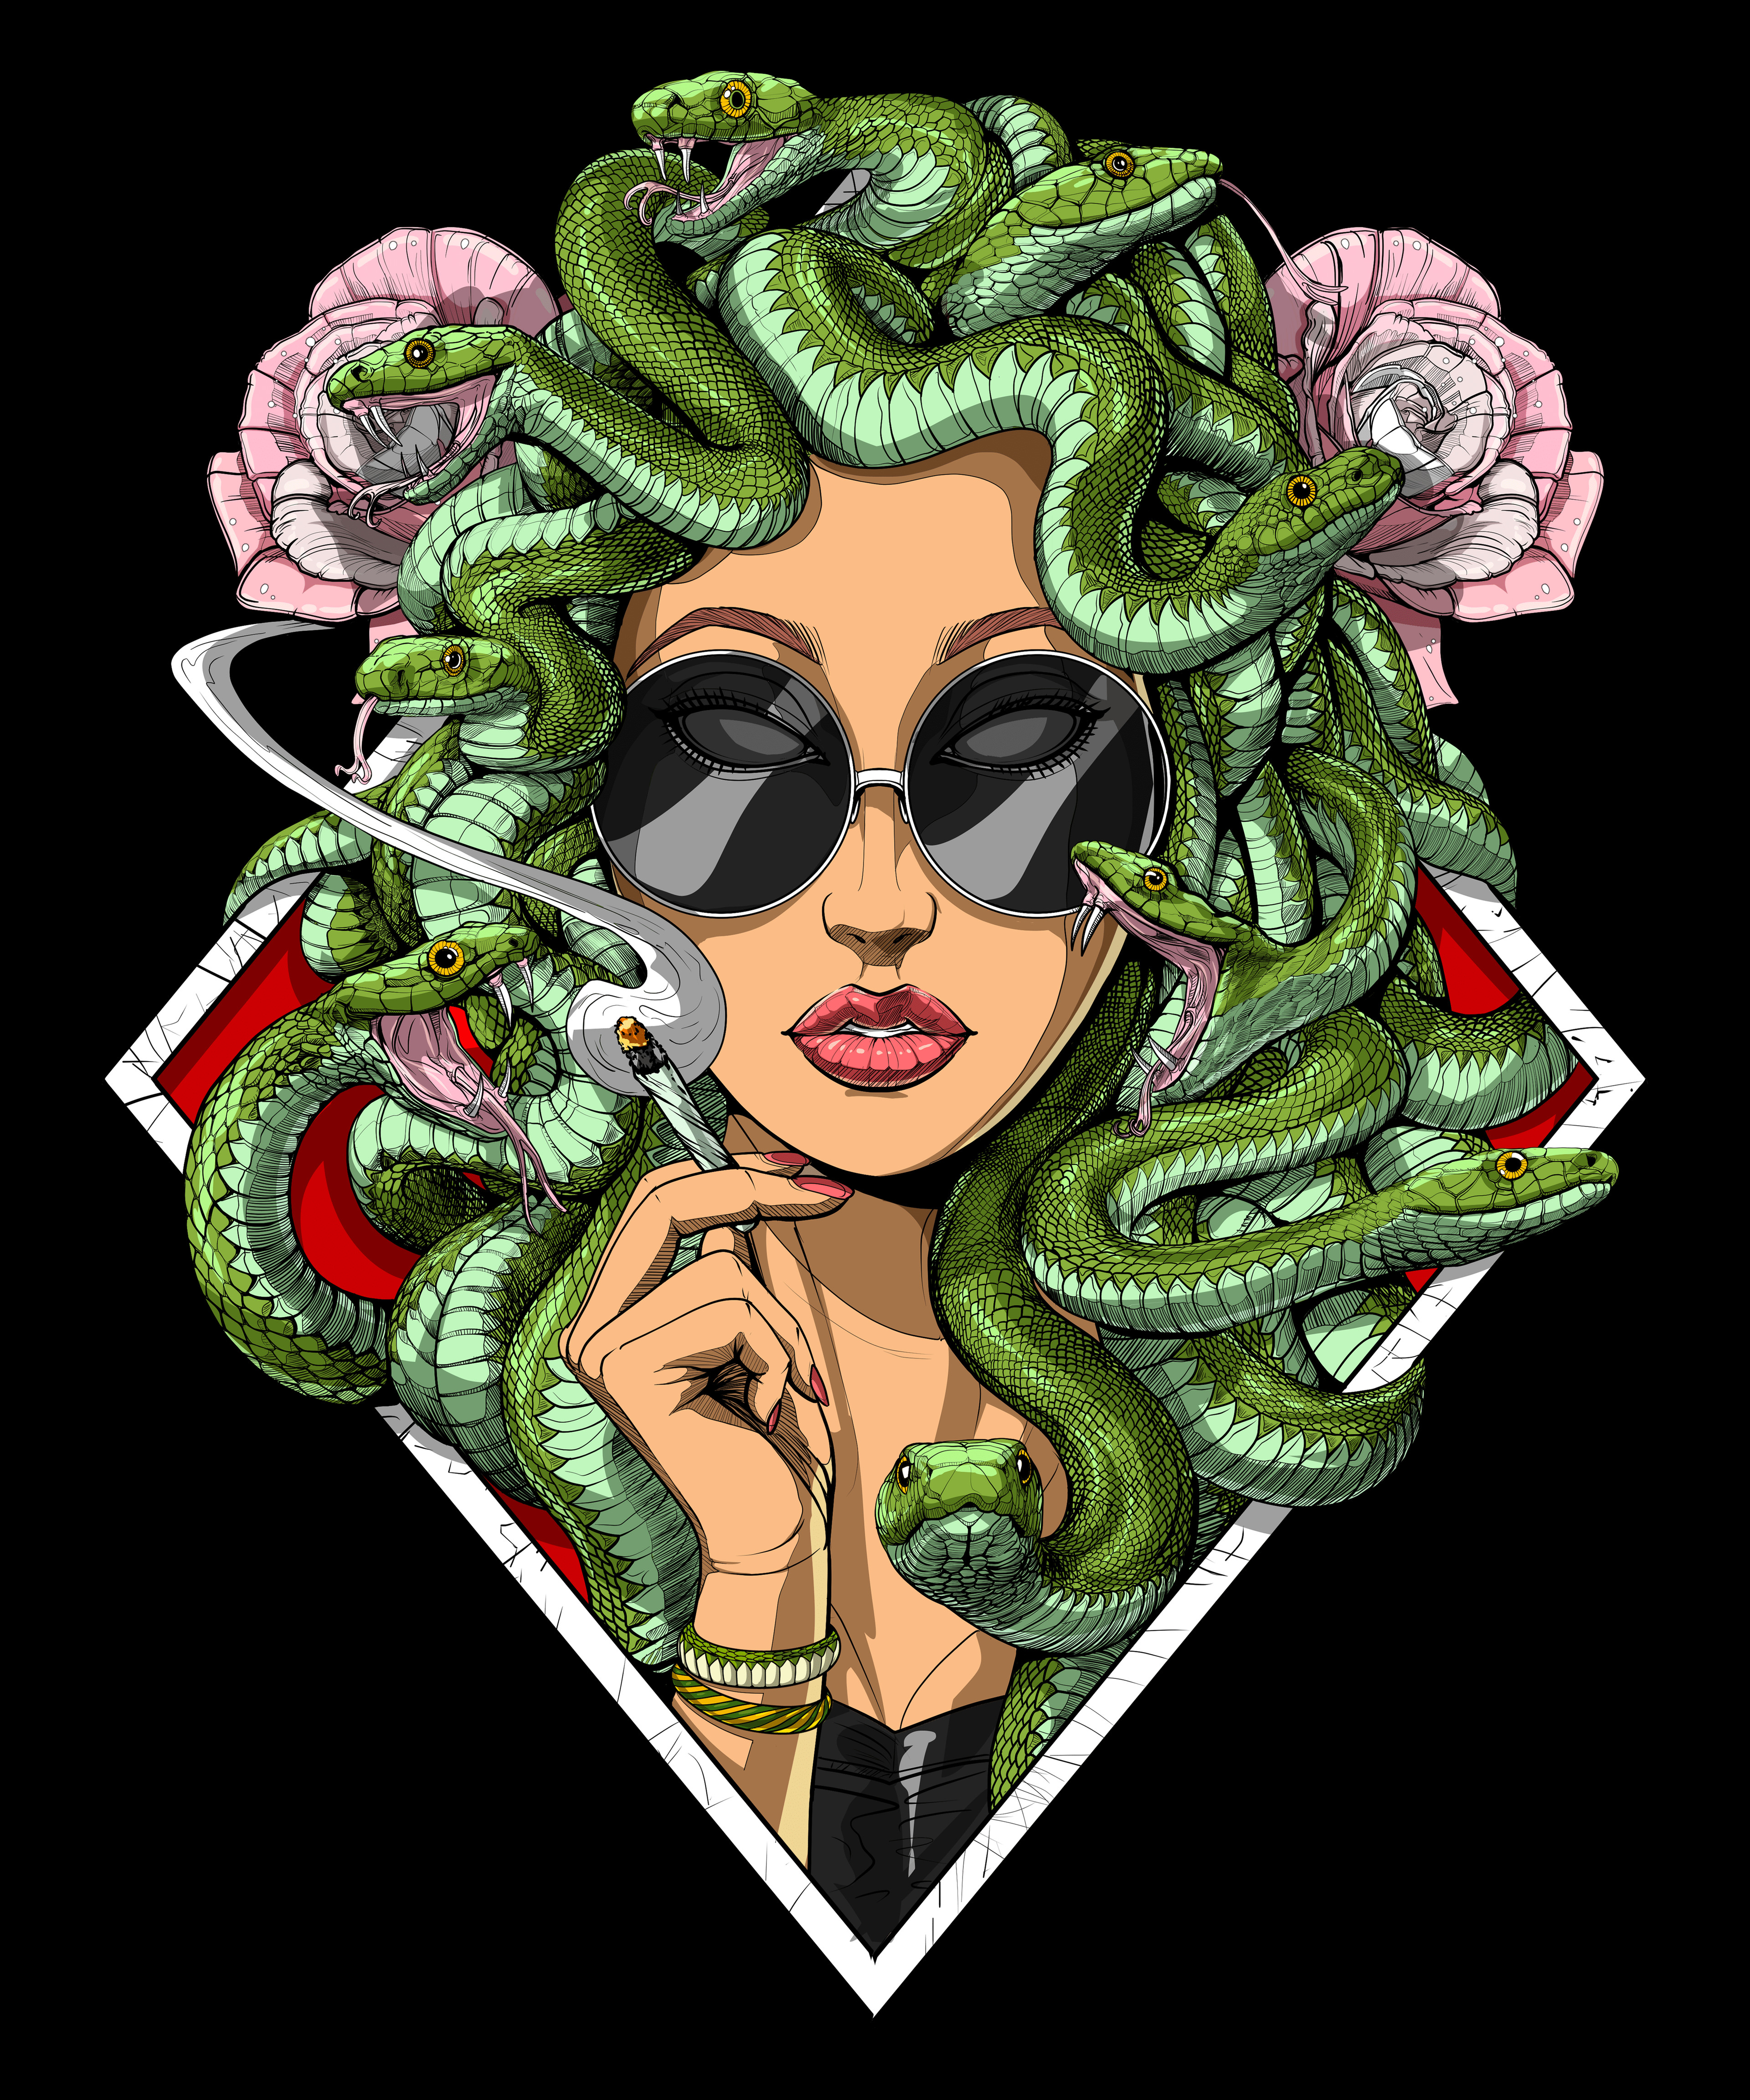 Medusa Gorgon Goddess by Nikolay Todorov